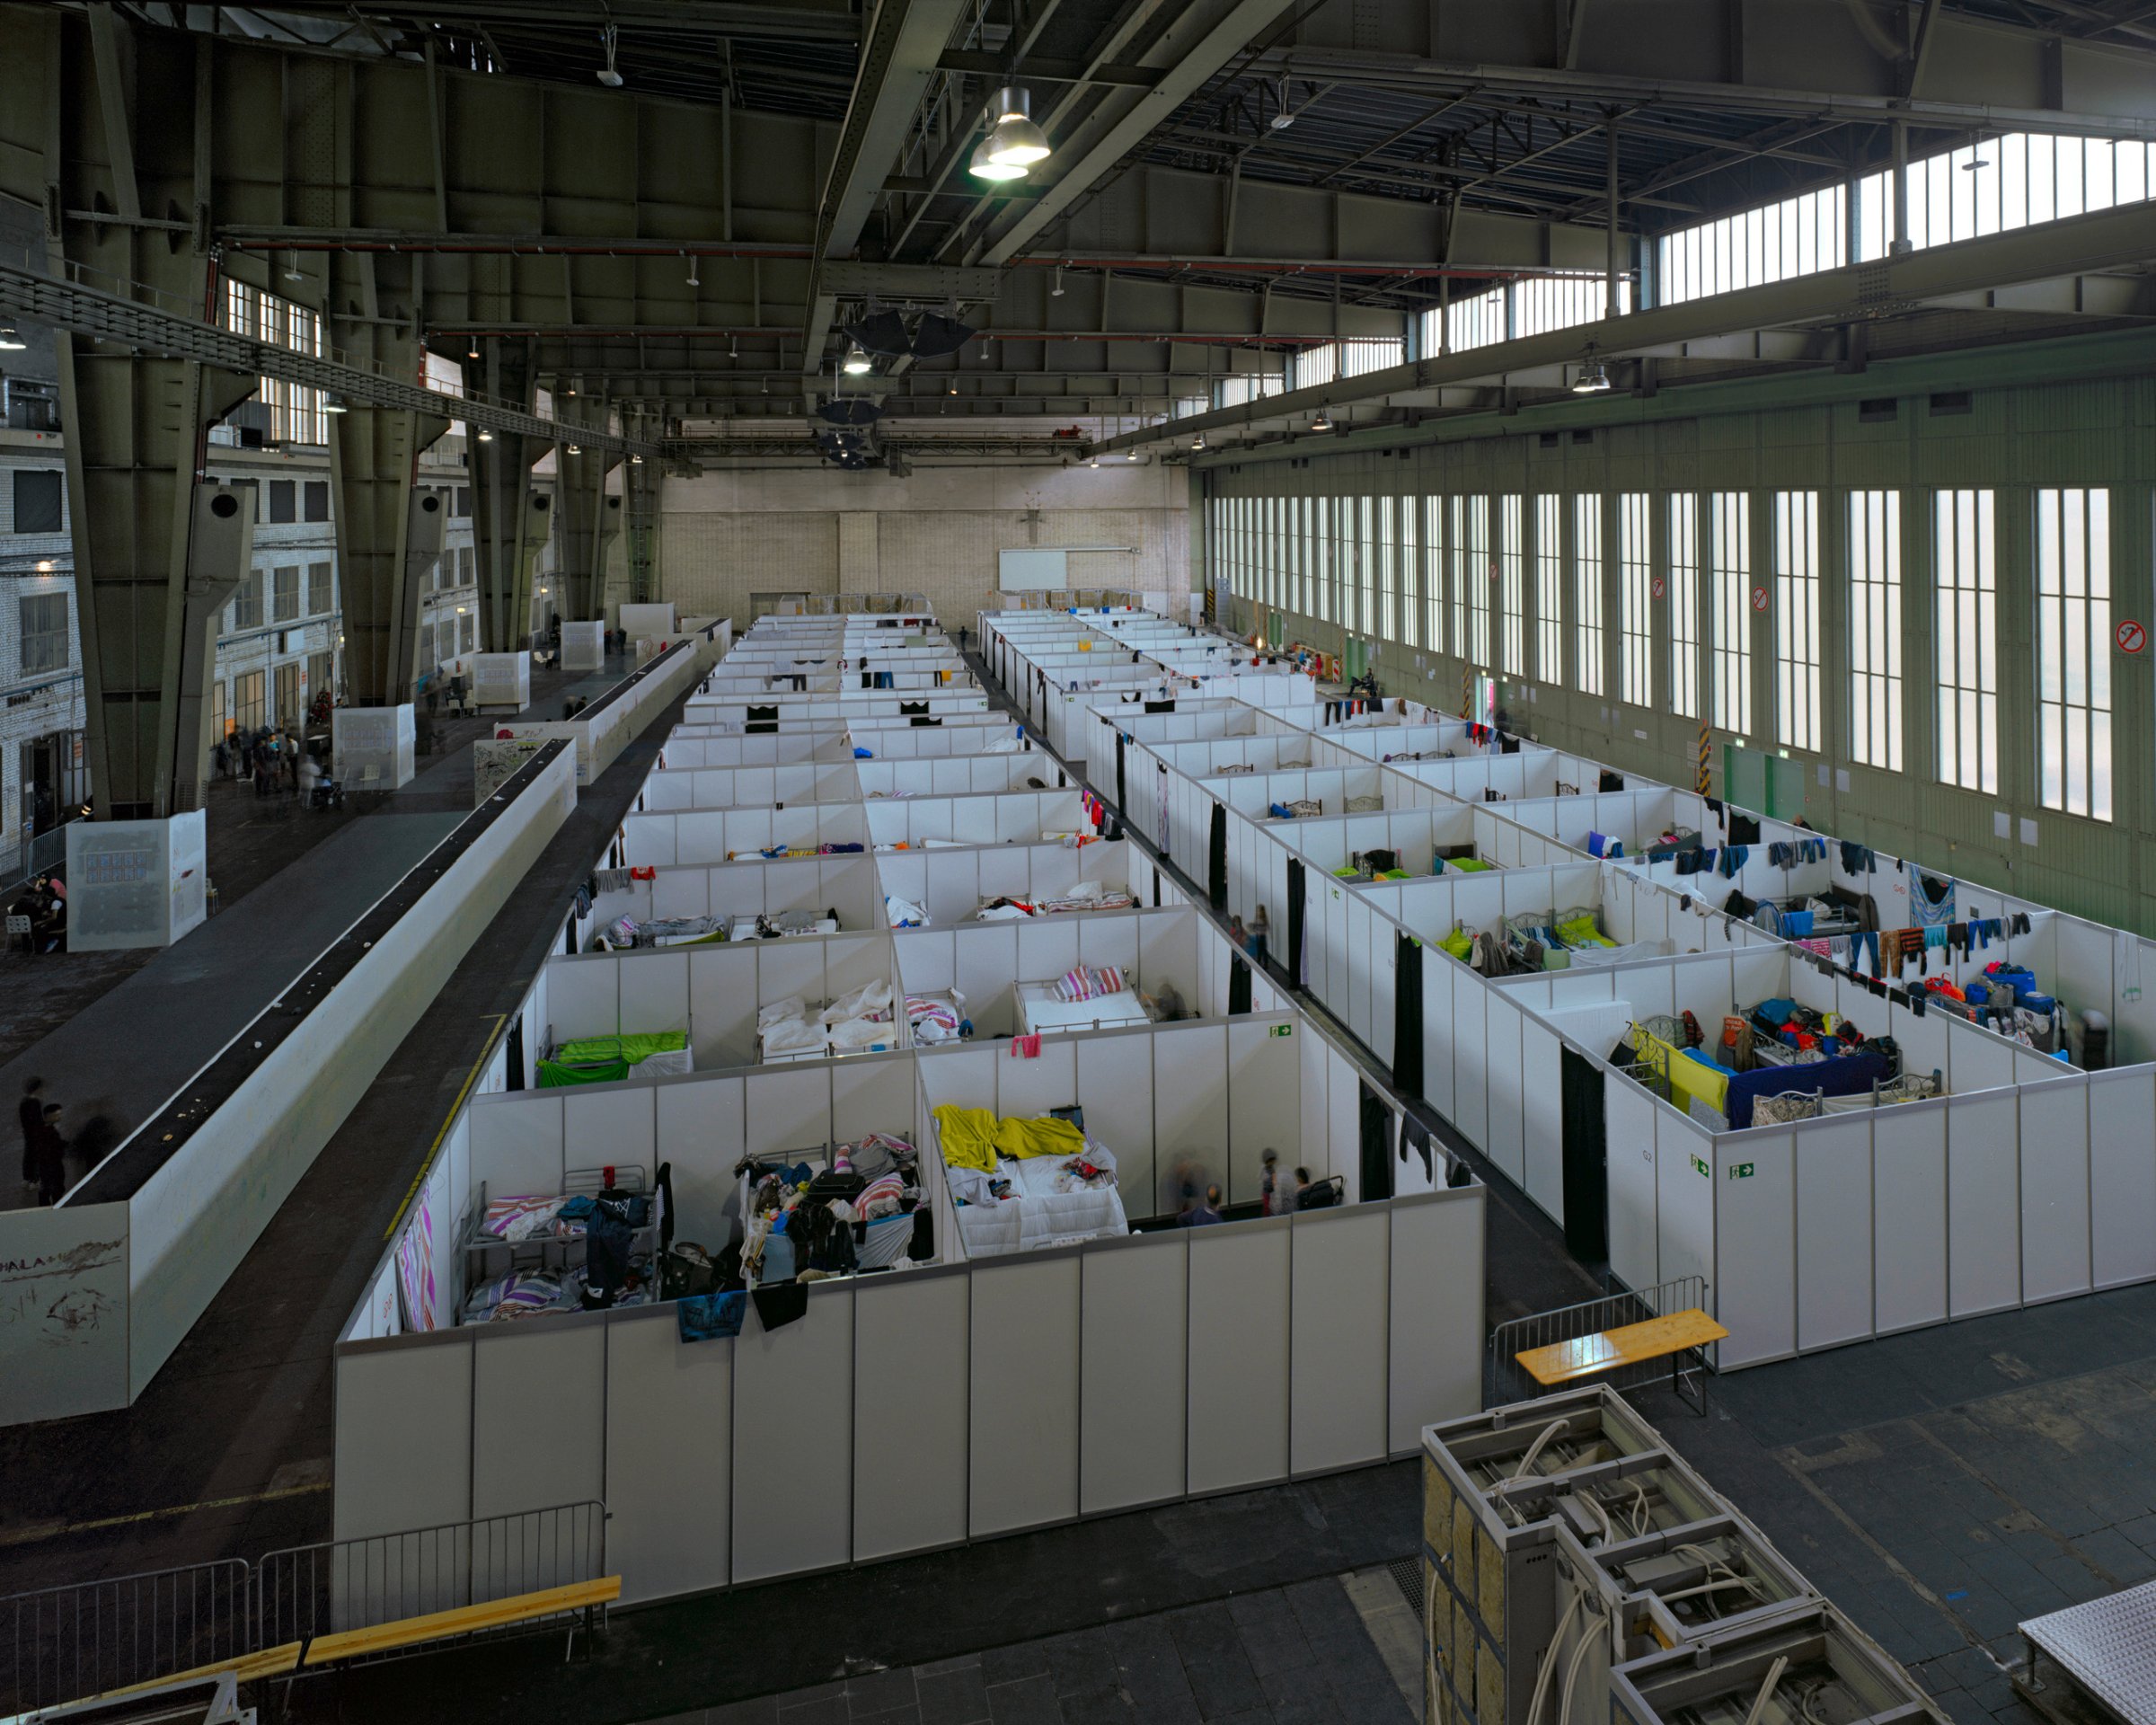 A temporary refugee camp in a former hangar of Berlin’s Tempelhof Airport.